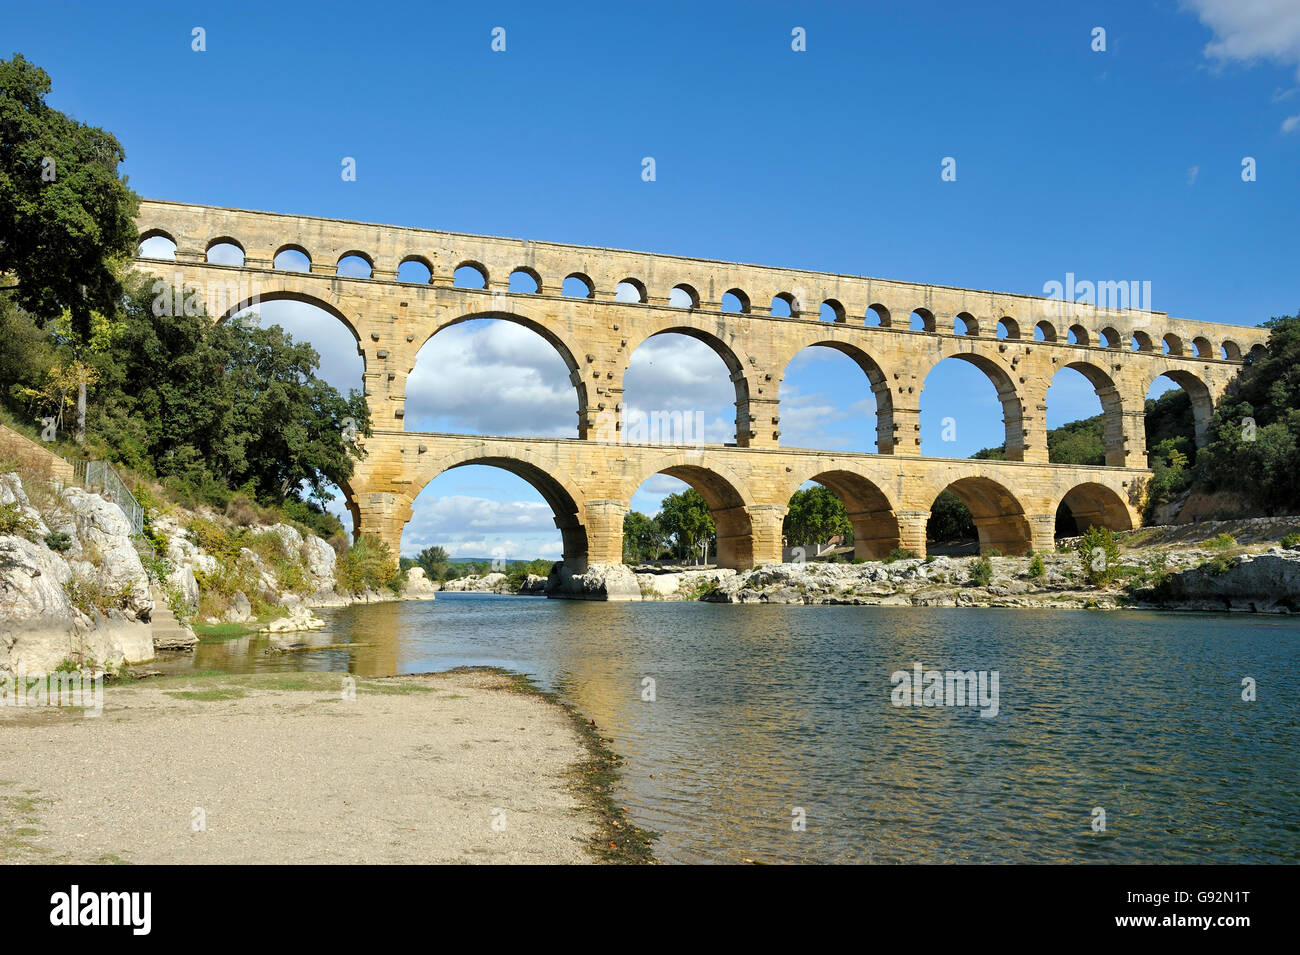 Roman aqueduct Pont du Gard, France. This bridge is an Unesco World Heritage site. Stock Photo